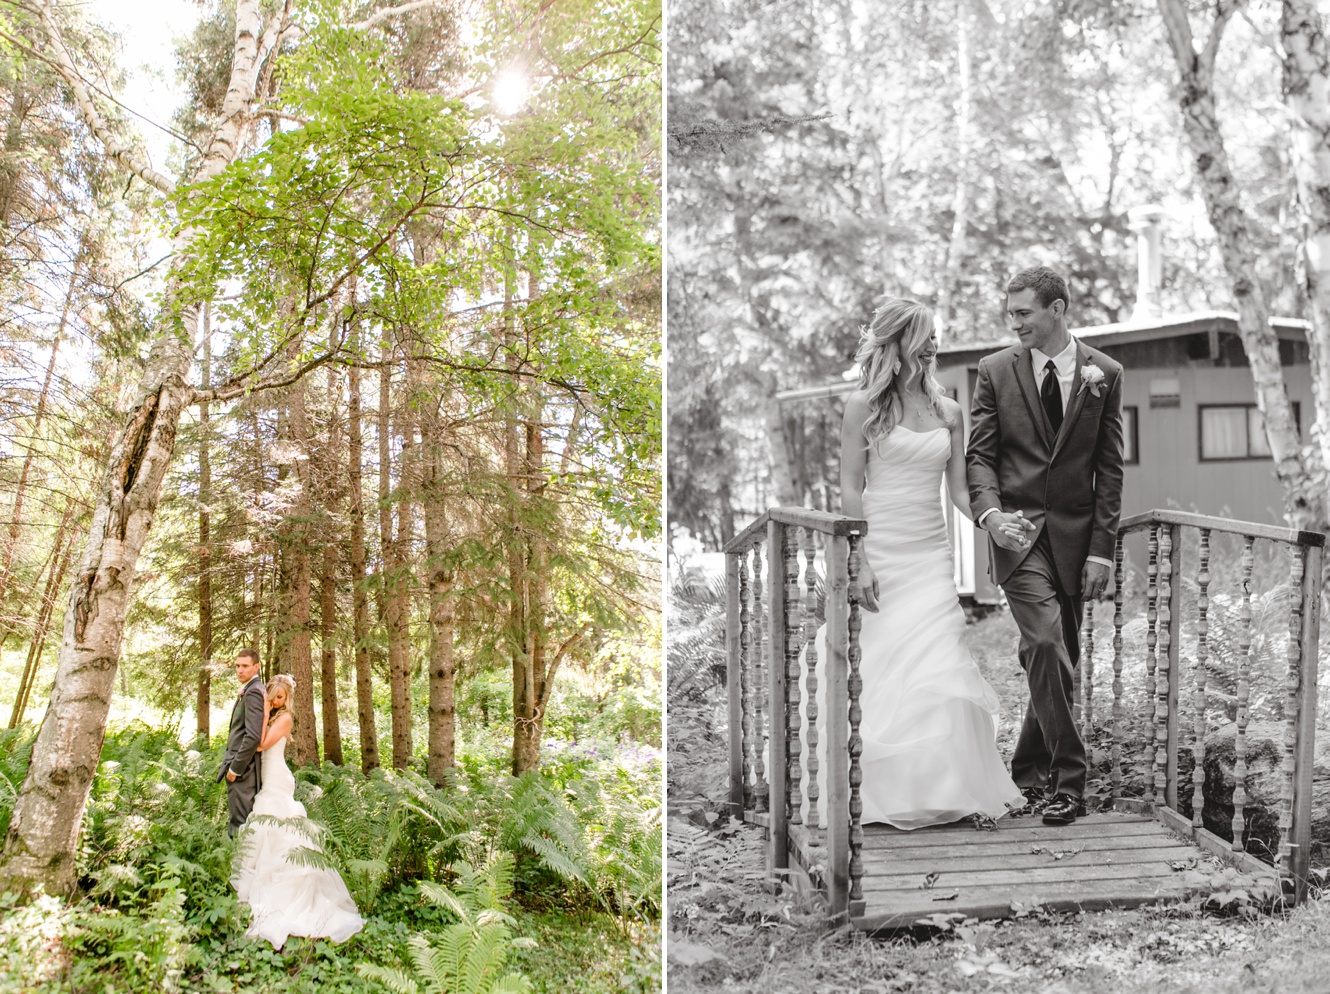 Enchanted forest wedding photo